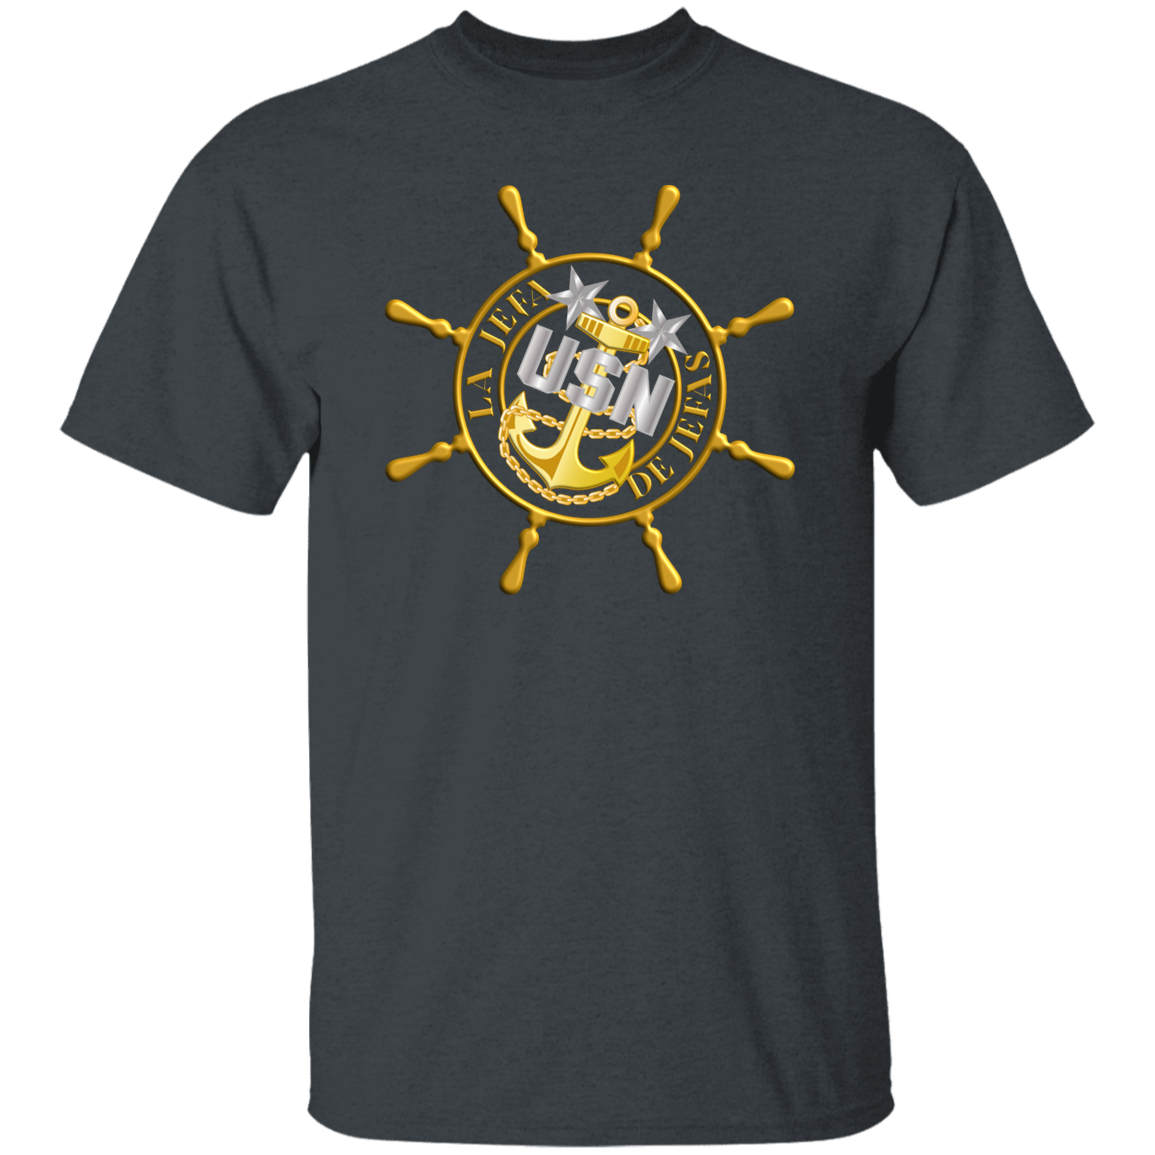 Ships Wheel Master Jefa 5.3 oz. T-Shirt